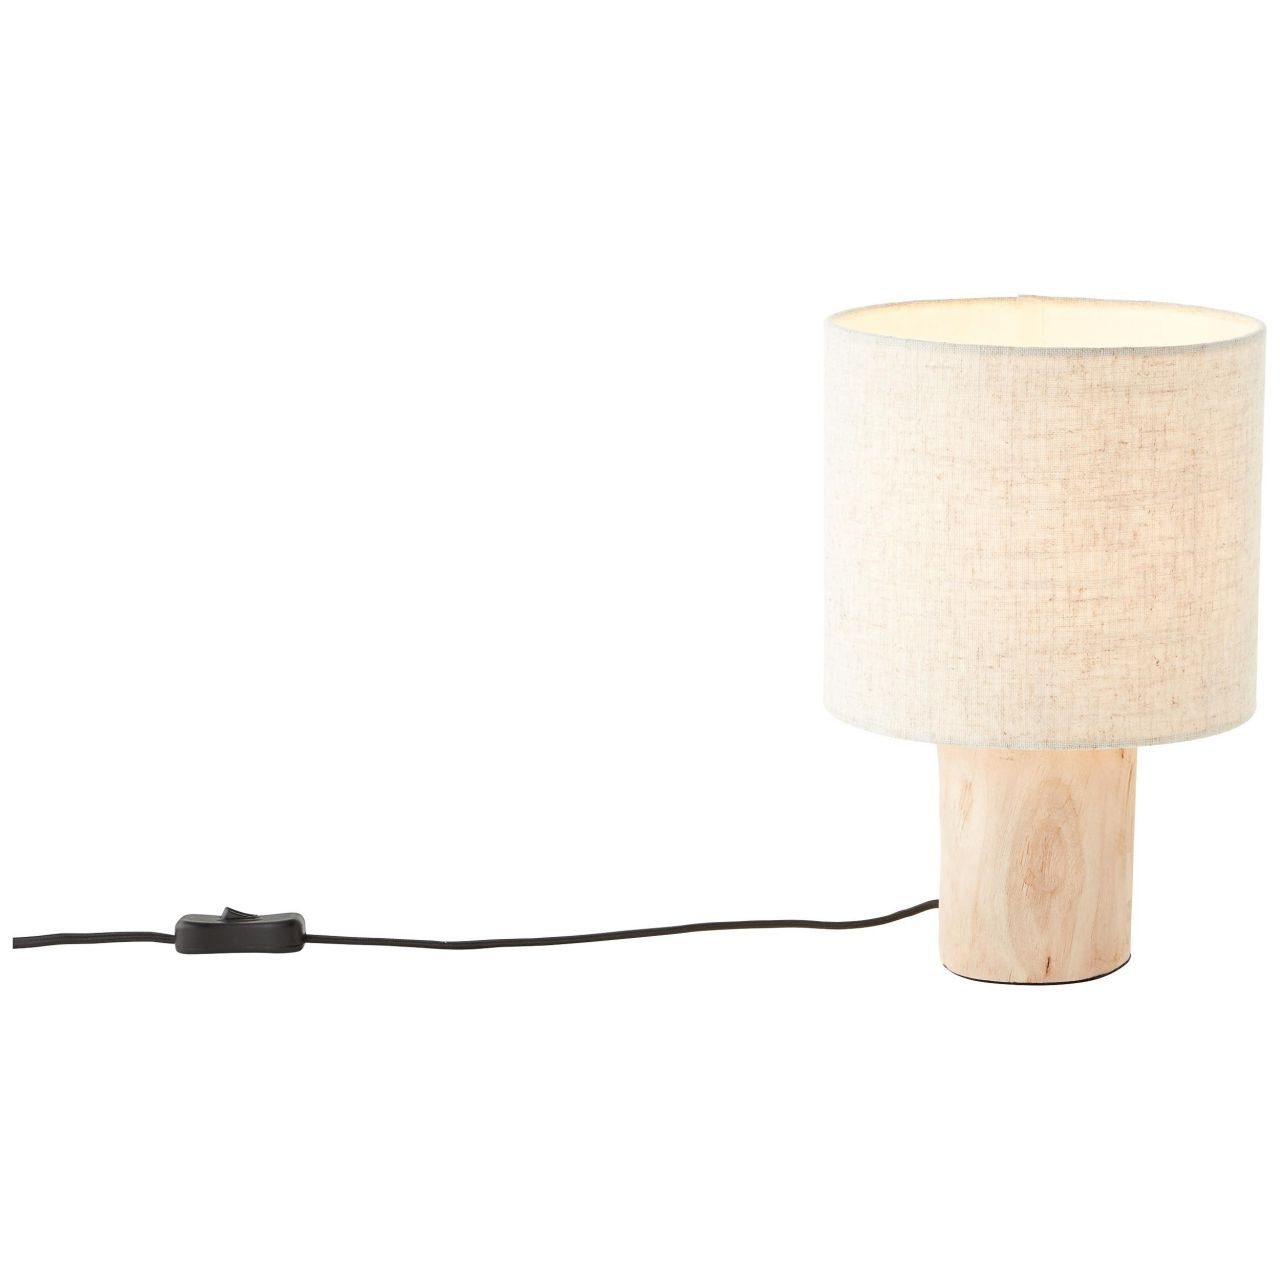 Pia E27, Tischleuchte Brilliant nachhaltiger 1x natur, A60, Tischleuchte aus Holz Lampe, 40W, Pia,